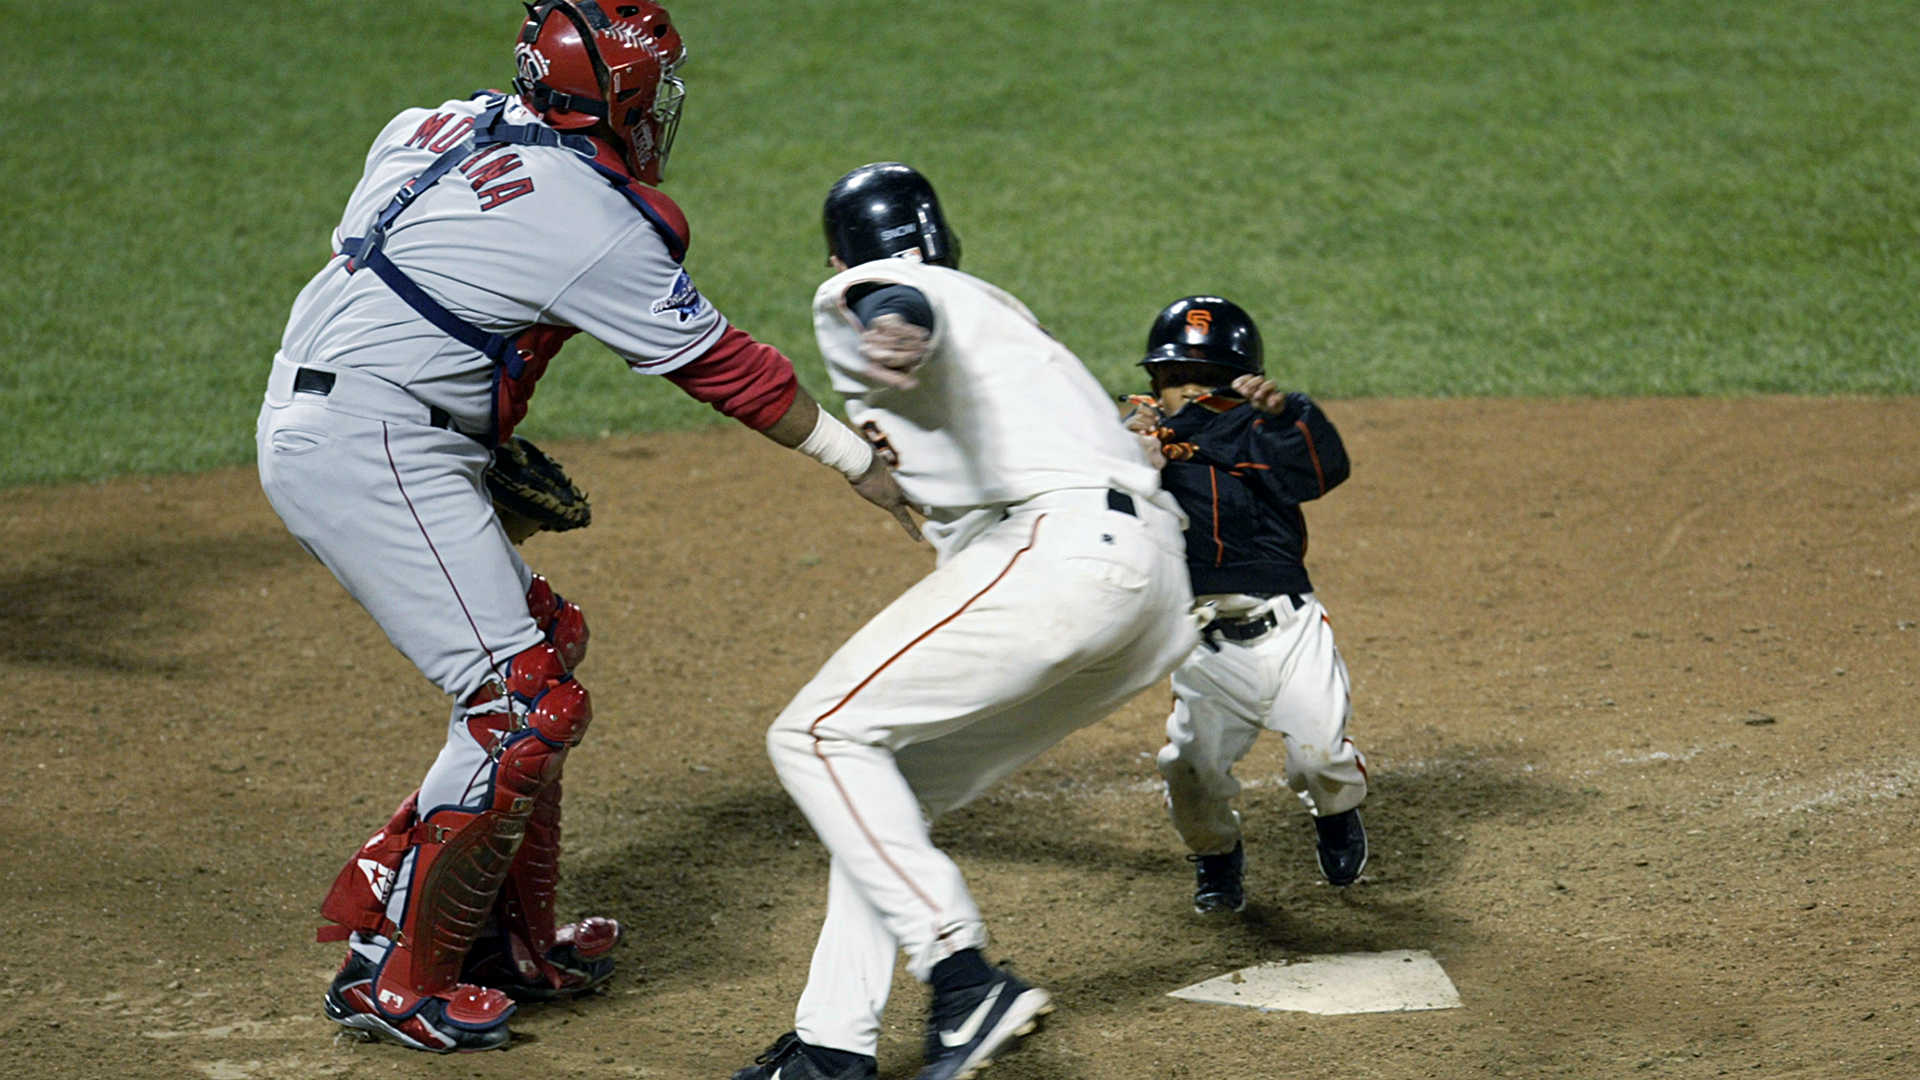 J.T. Snow, Darren Baker reminisce about famous 2002 World Series scene | Sporting News ...1920 x 1080